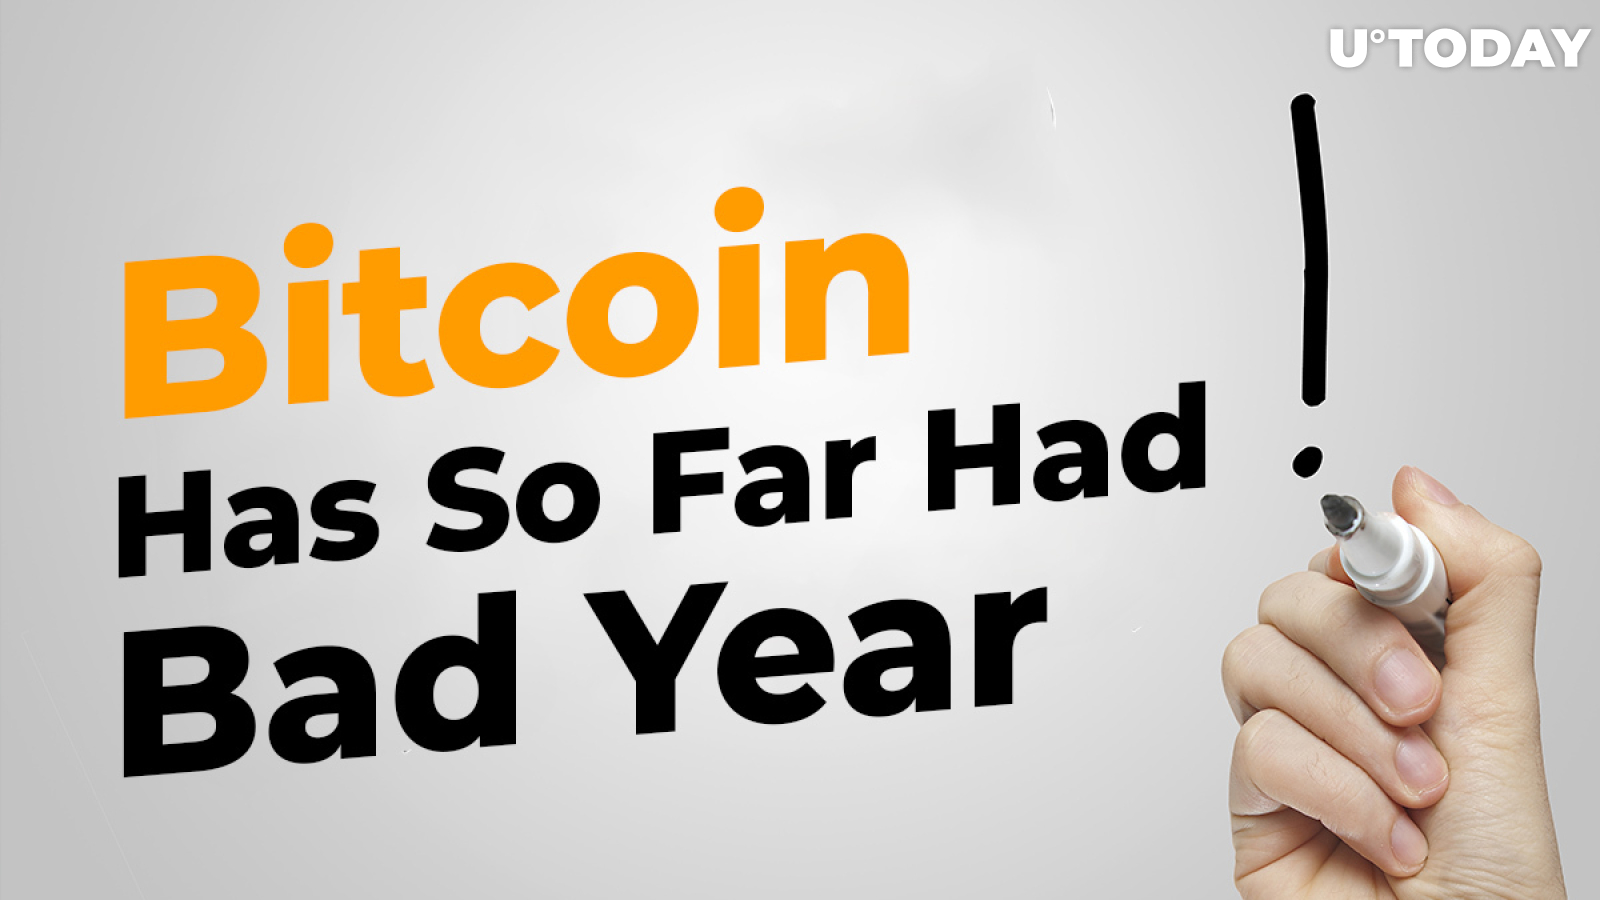 Bitcoin (BTC) Has So Far Had Bad Year: Bloomberg